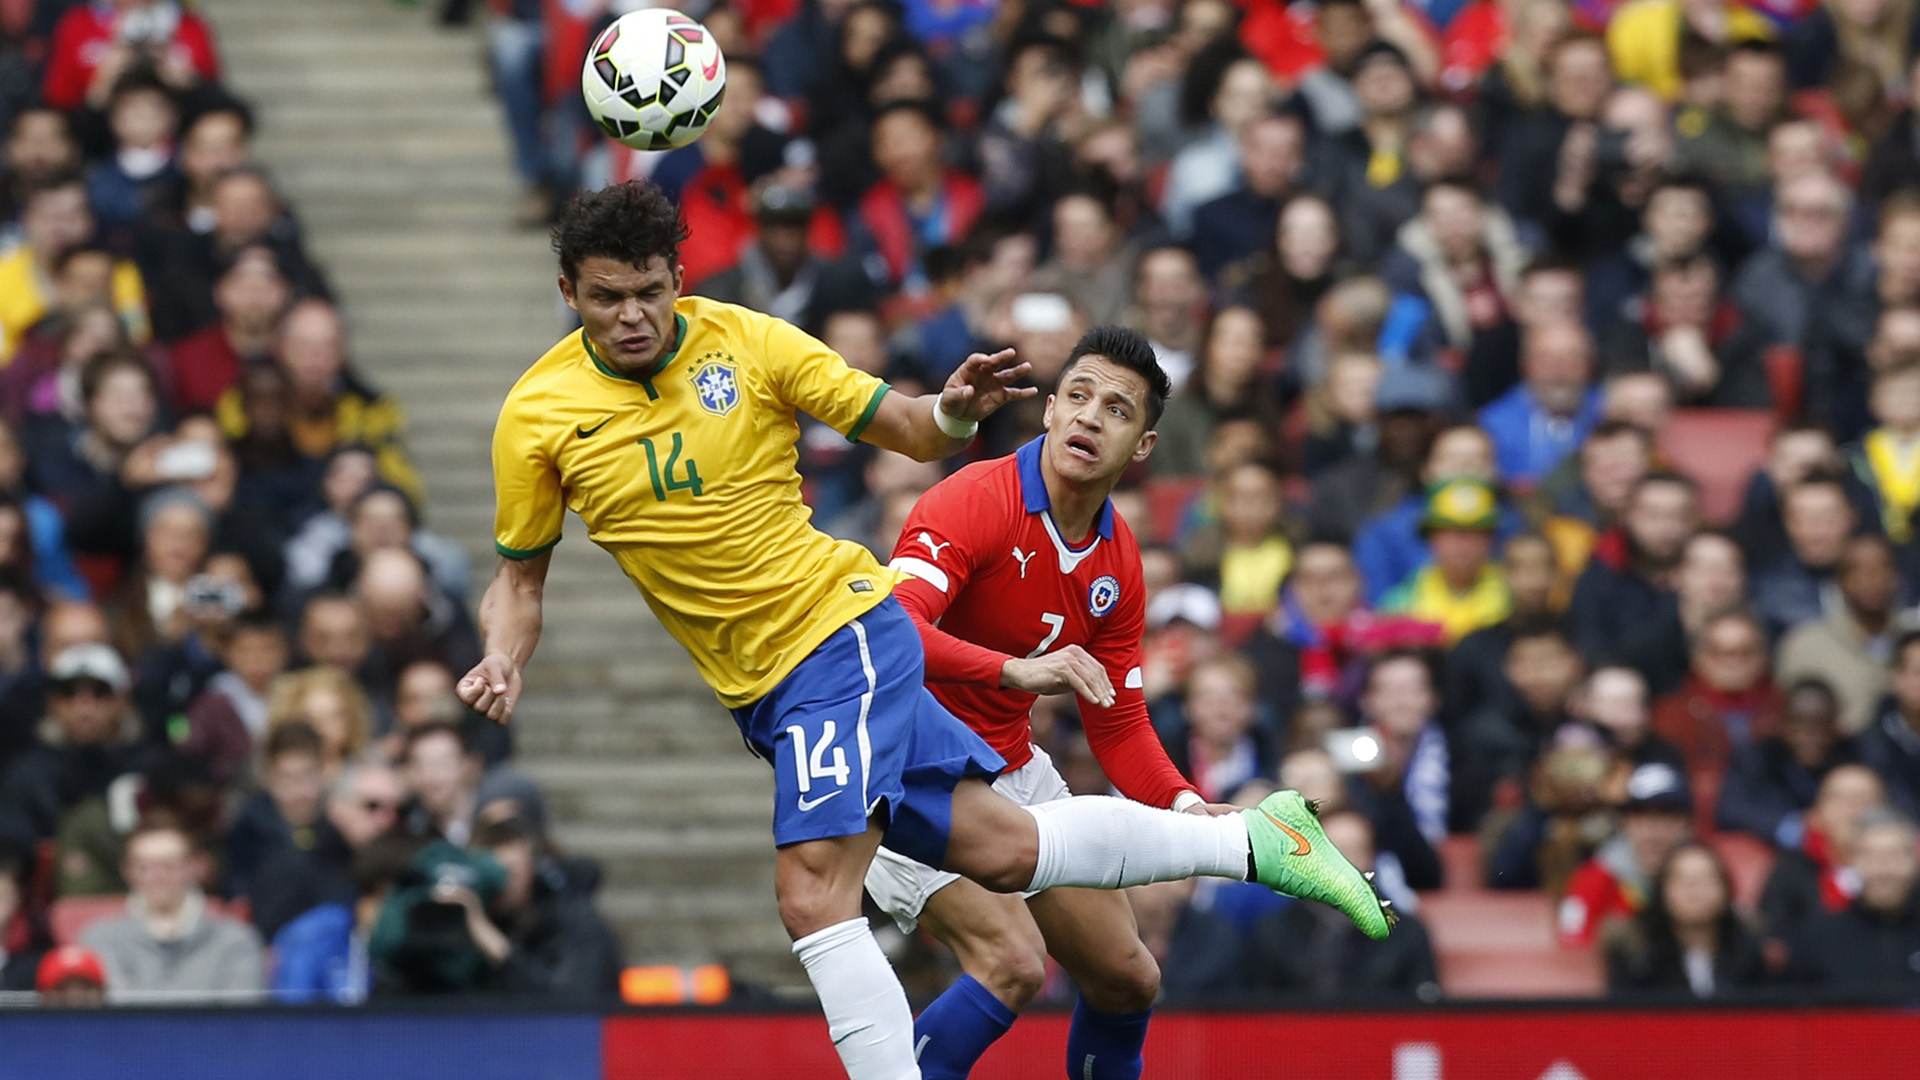 Thiago Silva Football Soccer Player Head Ball Free Hd Mobile Desktop Background Download Wallpaper Images